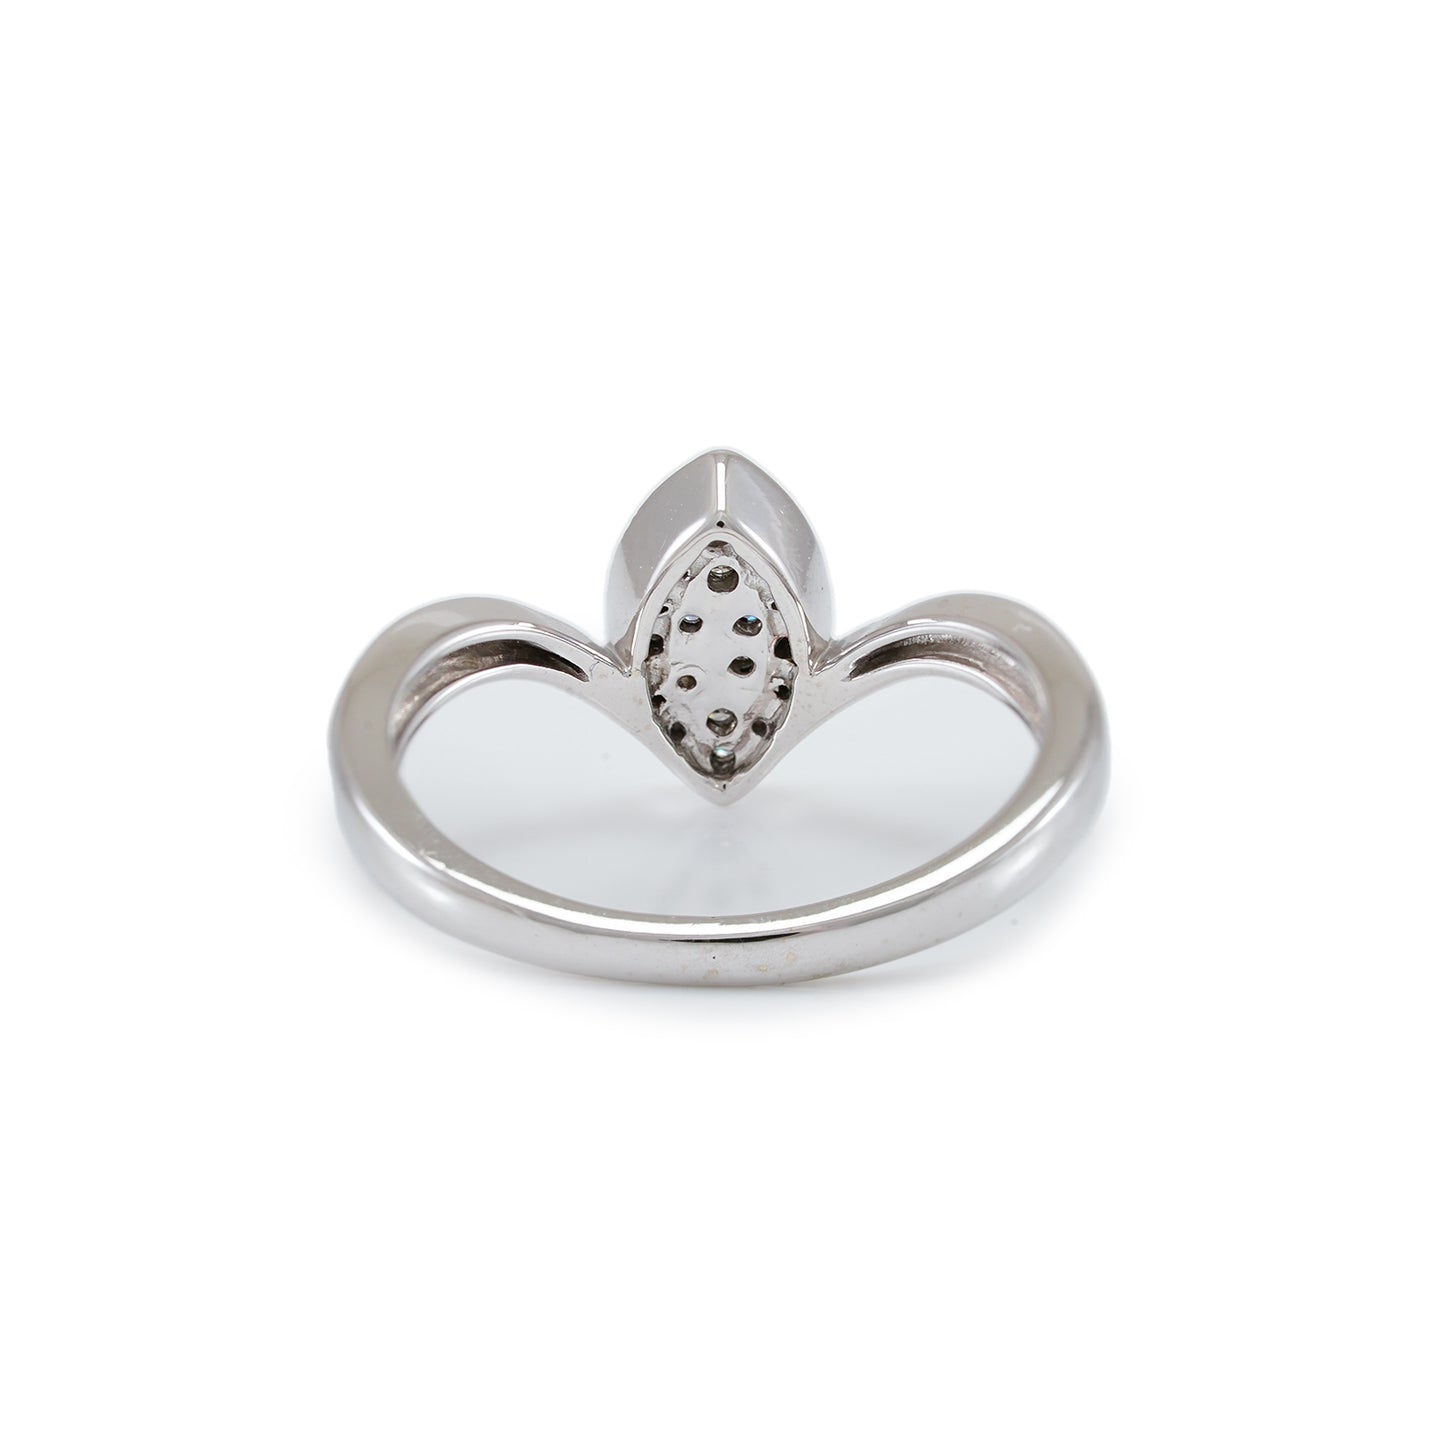 Diamant Pave Ring Weißgold 14K Damenschmuck Goldring Damenring diamond ring